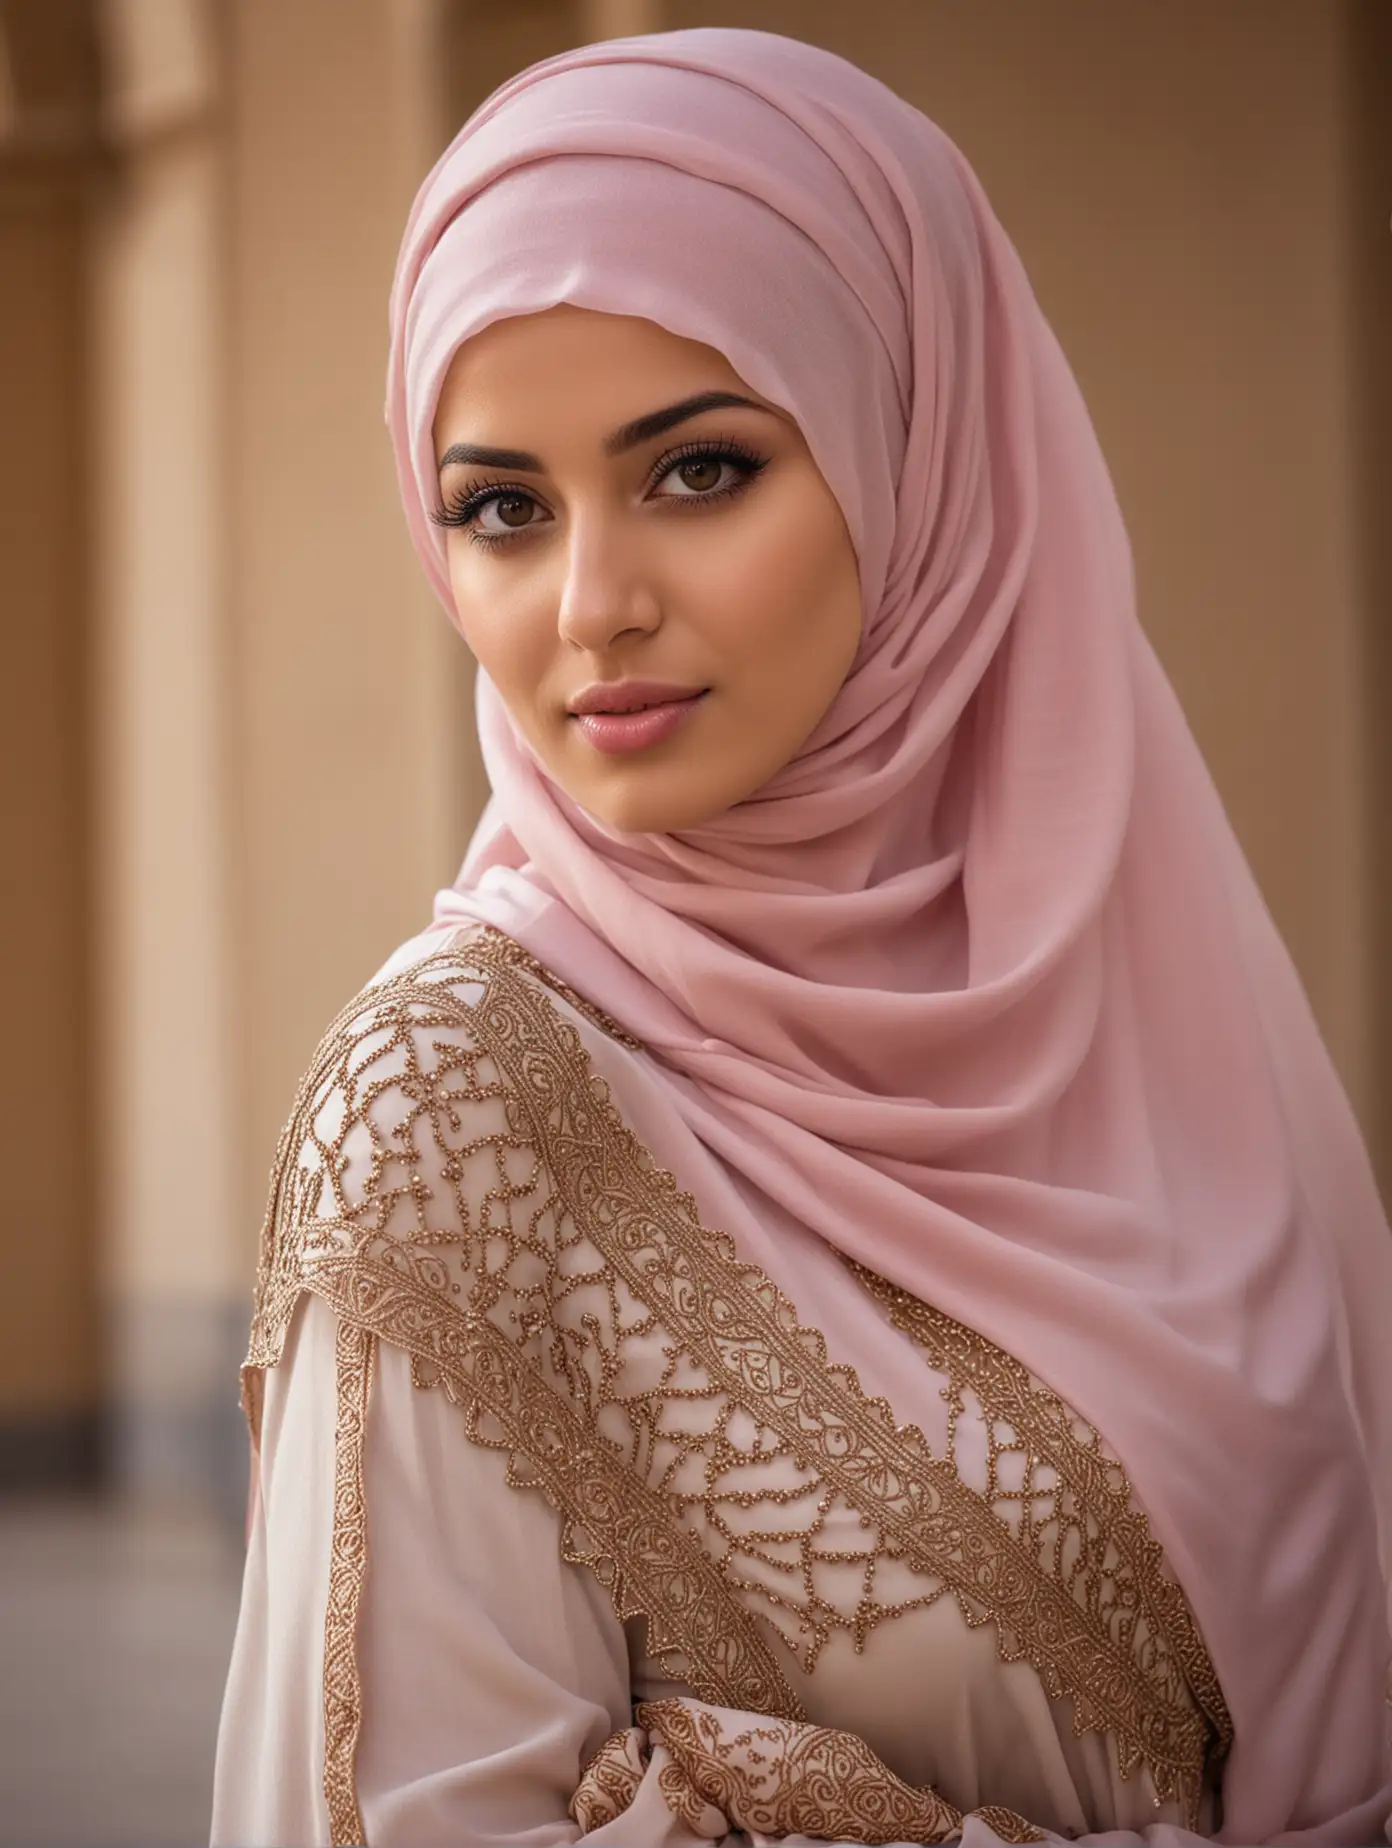 Elegant Pregnant Arab Woman in Hijab Portrait